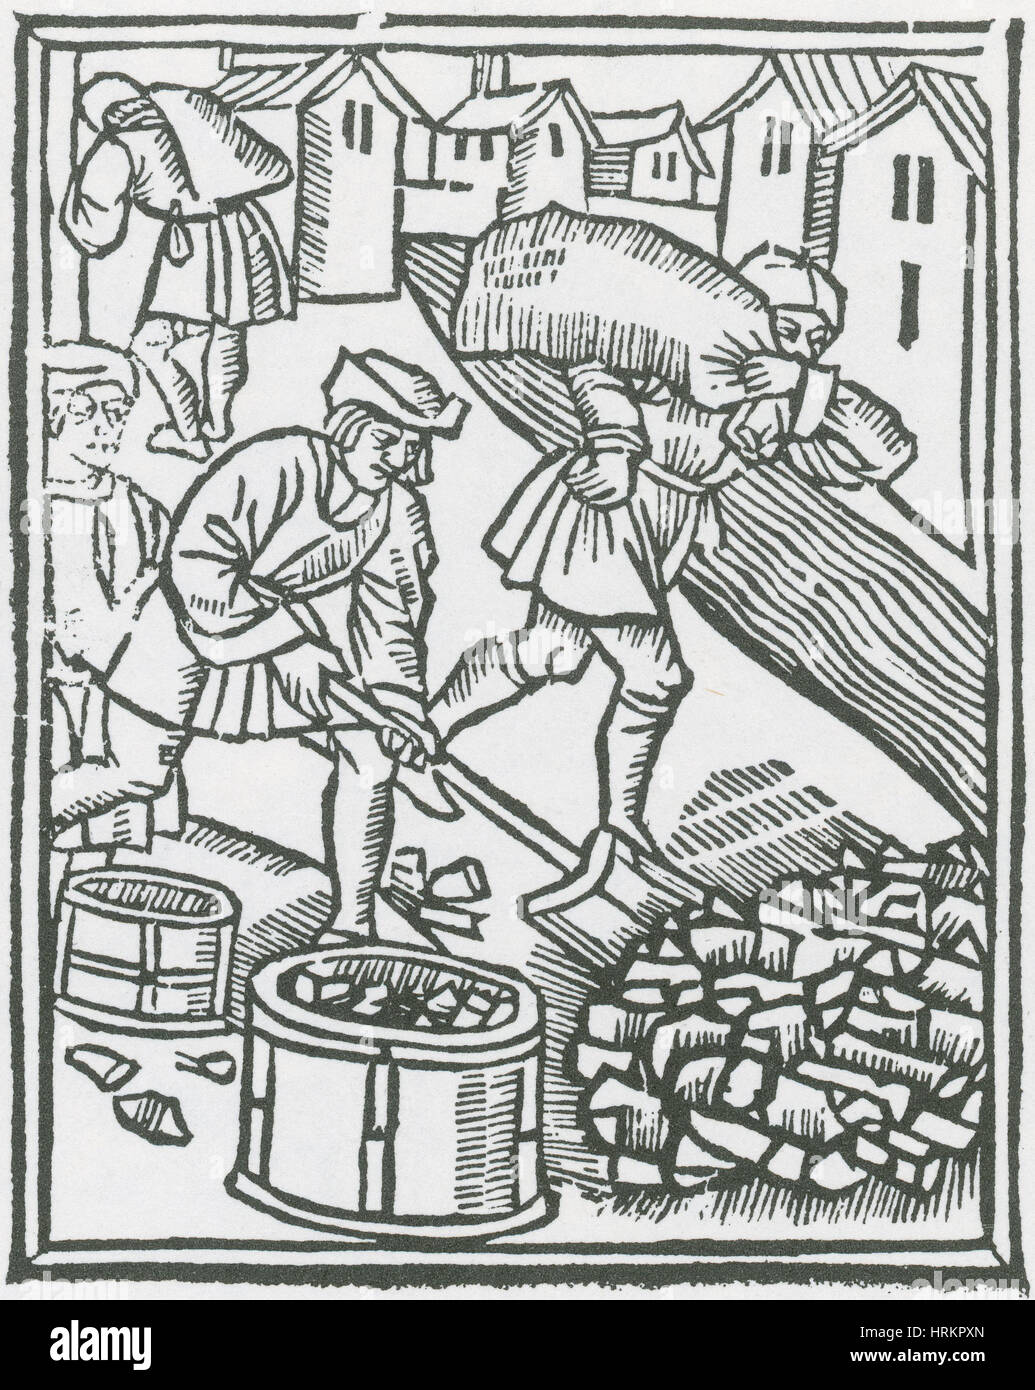 Bruciatori di carbone, commercianti medievali Foto Stock